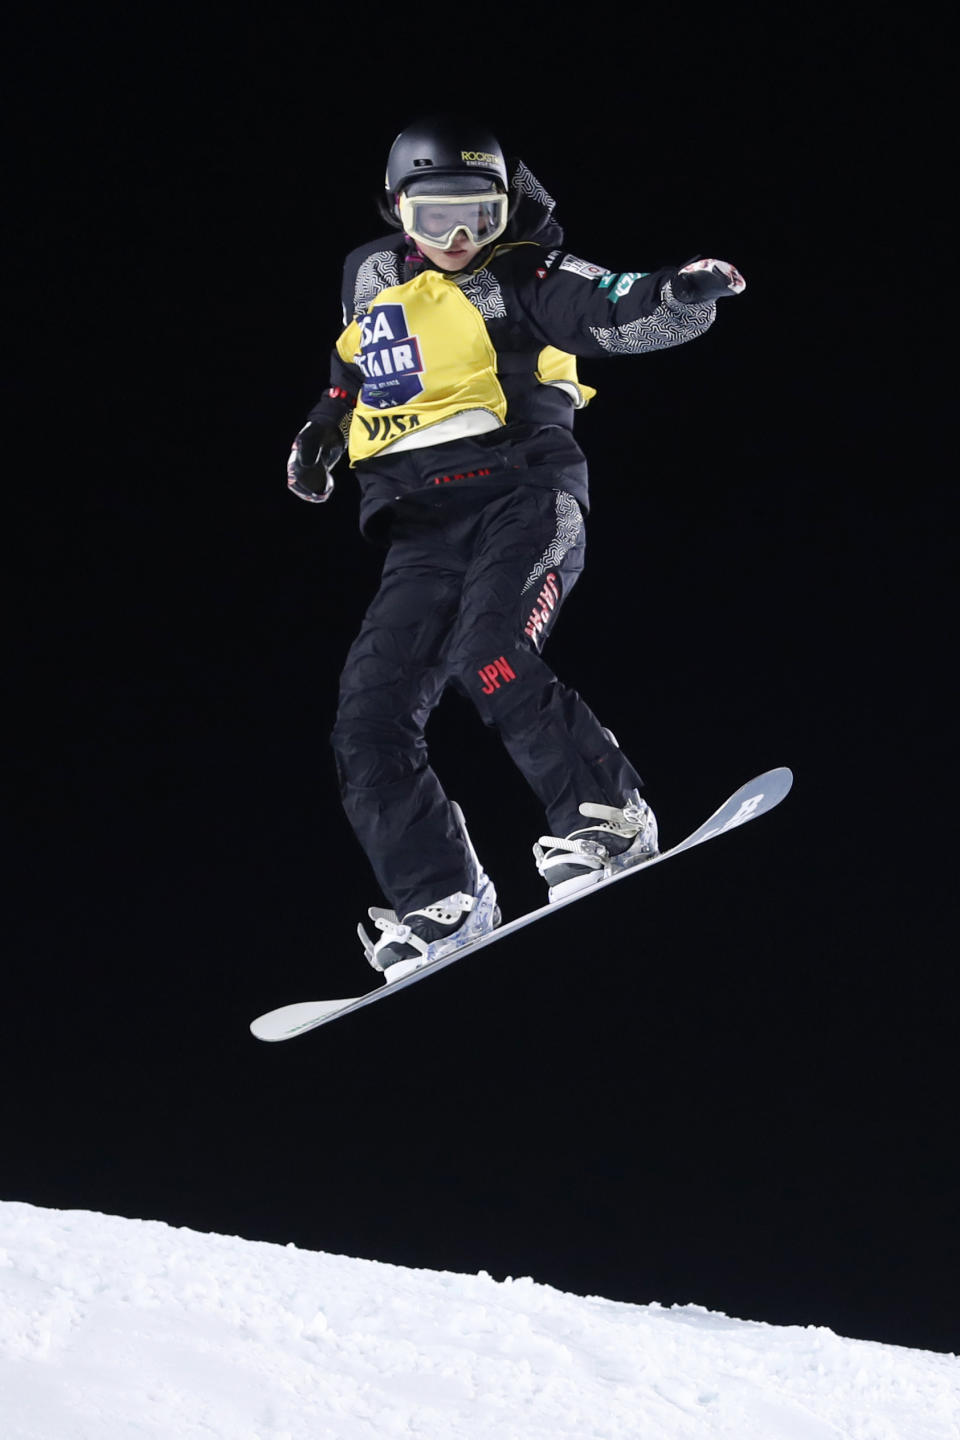 Reira Iwabuchi, of Japan, jumps during the finals of the Big Atlanta snowboard competition Friday, Dec. 20, 2019, in Atlanta. Iwabuchi won the event. (AP Photo/John Bazemore)